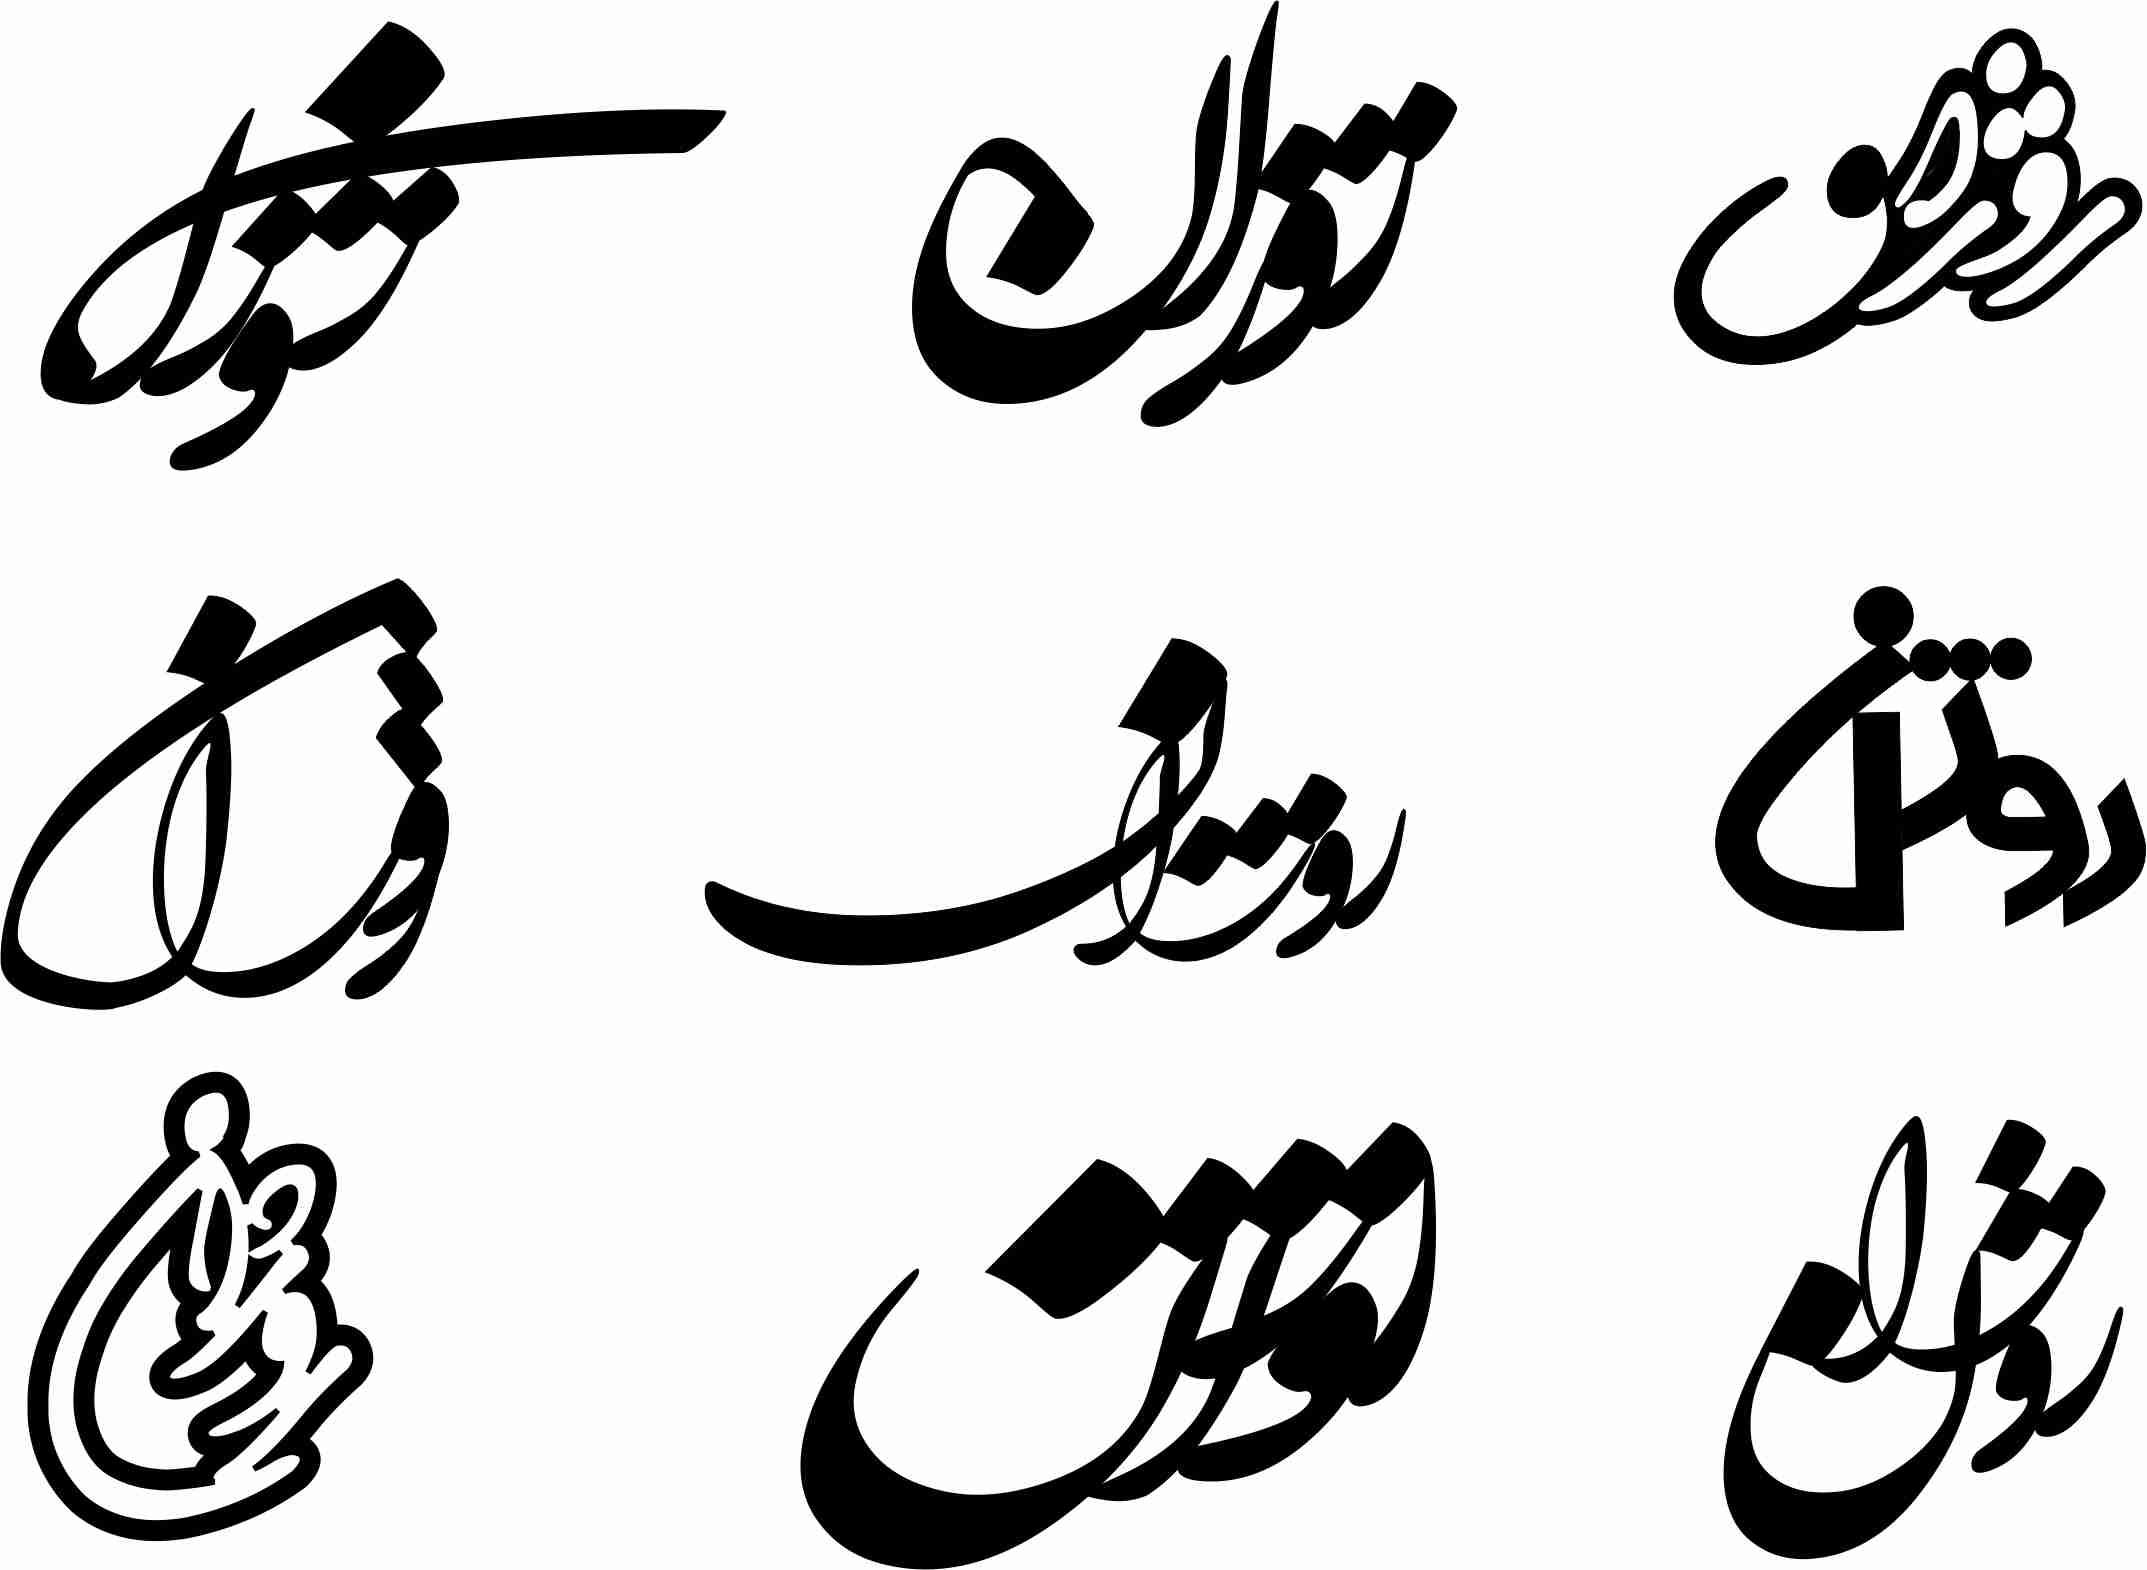 طراحی اسم فارسی آنلاین